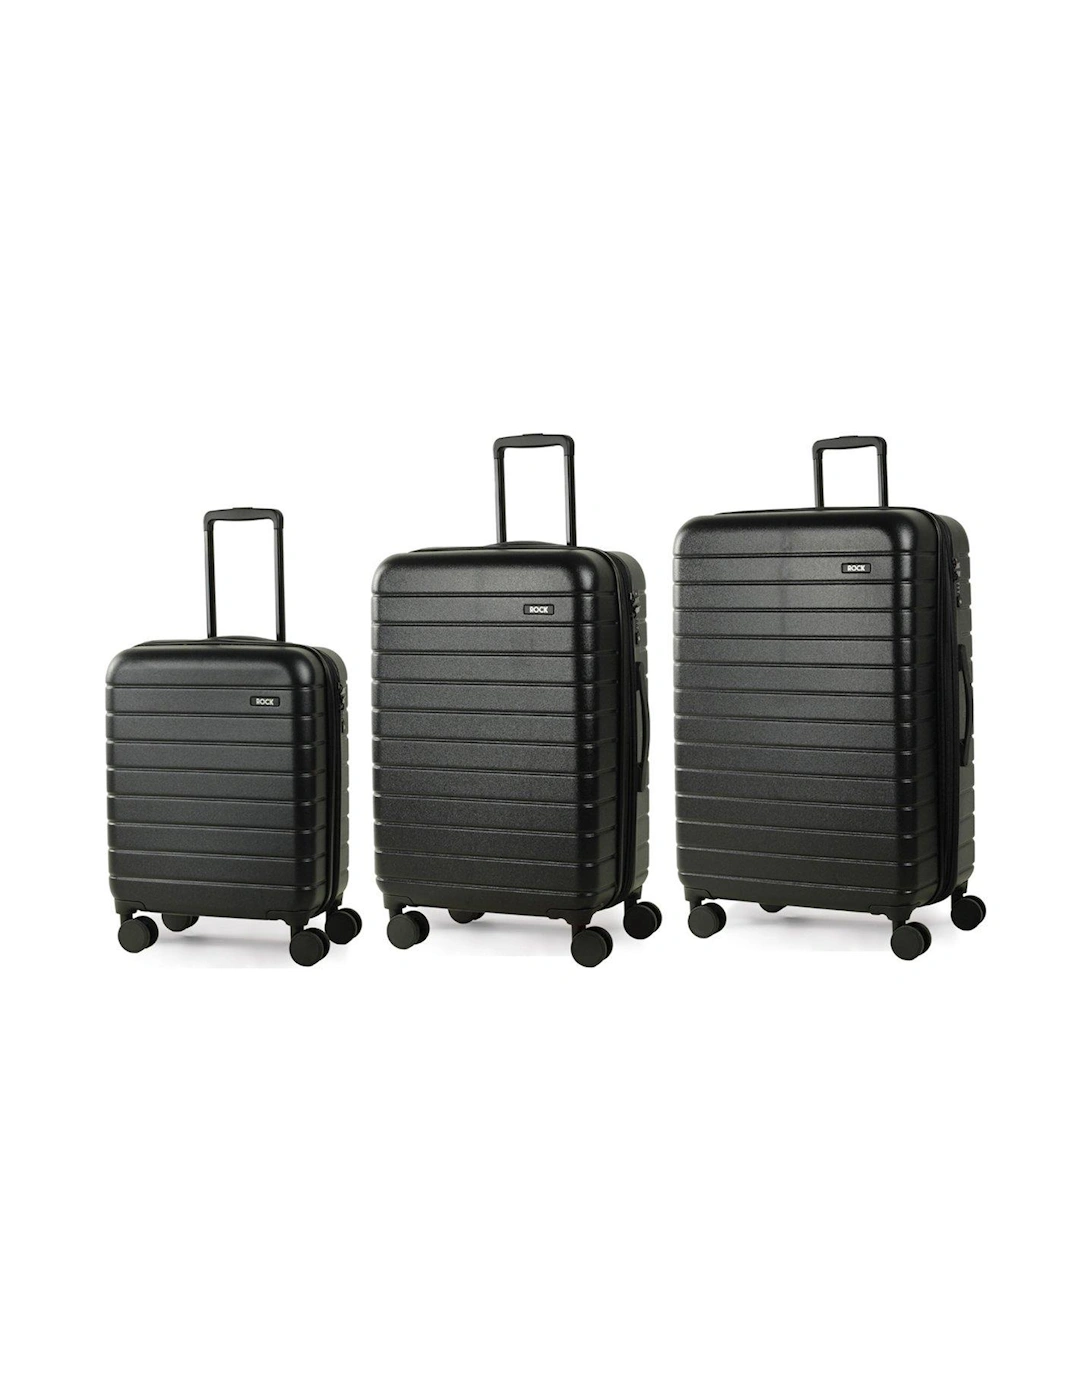 Novo 8-Wheel Suitcases 3 piece Set - Black, 2 of 1